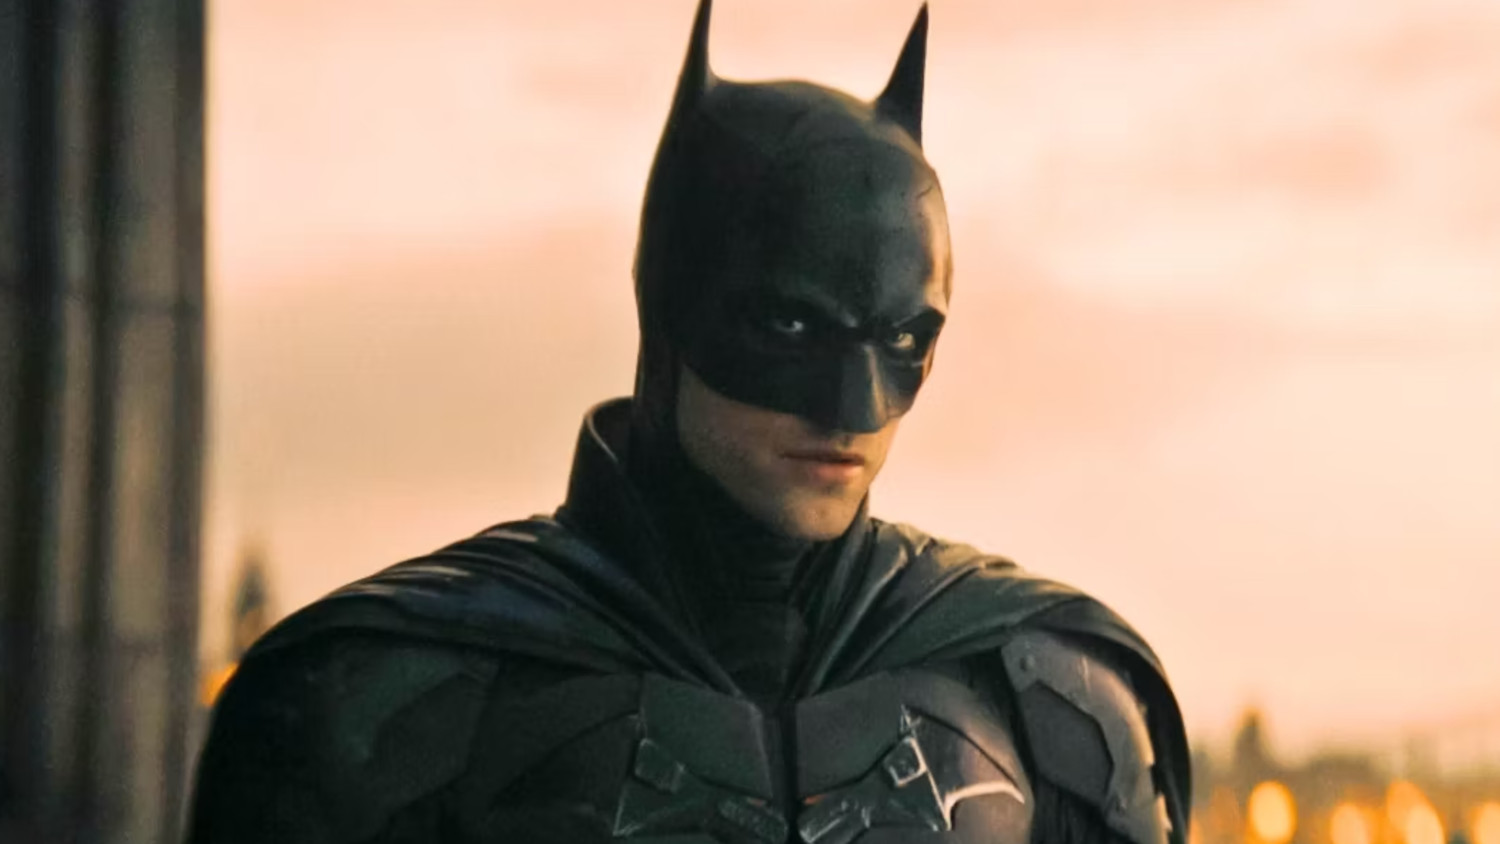 batman 2 filming early 2025 andy serkis